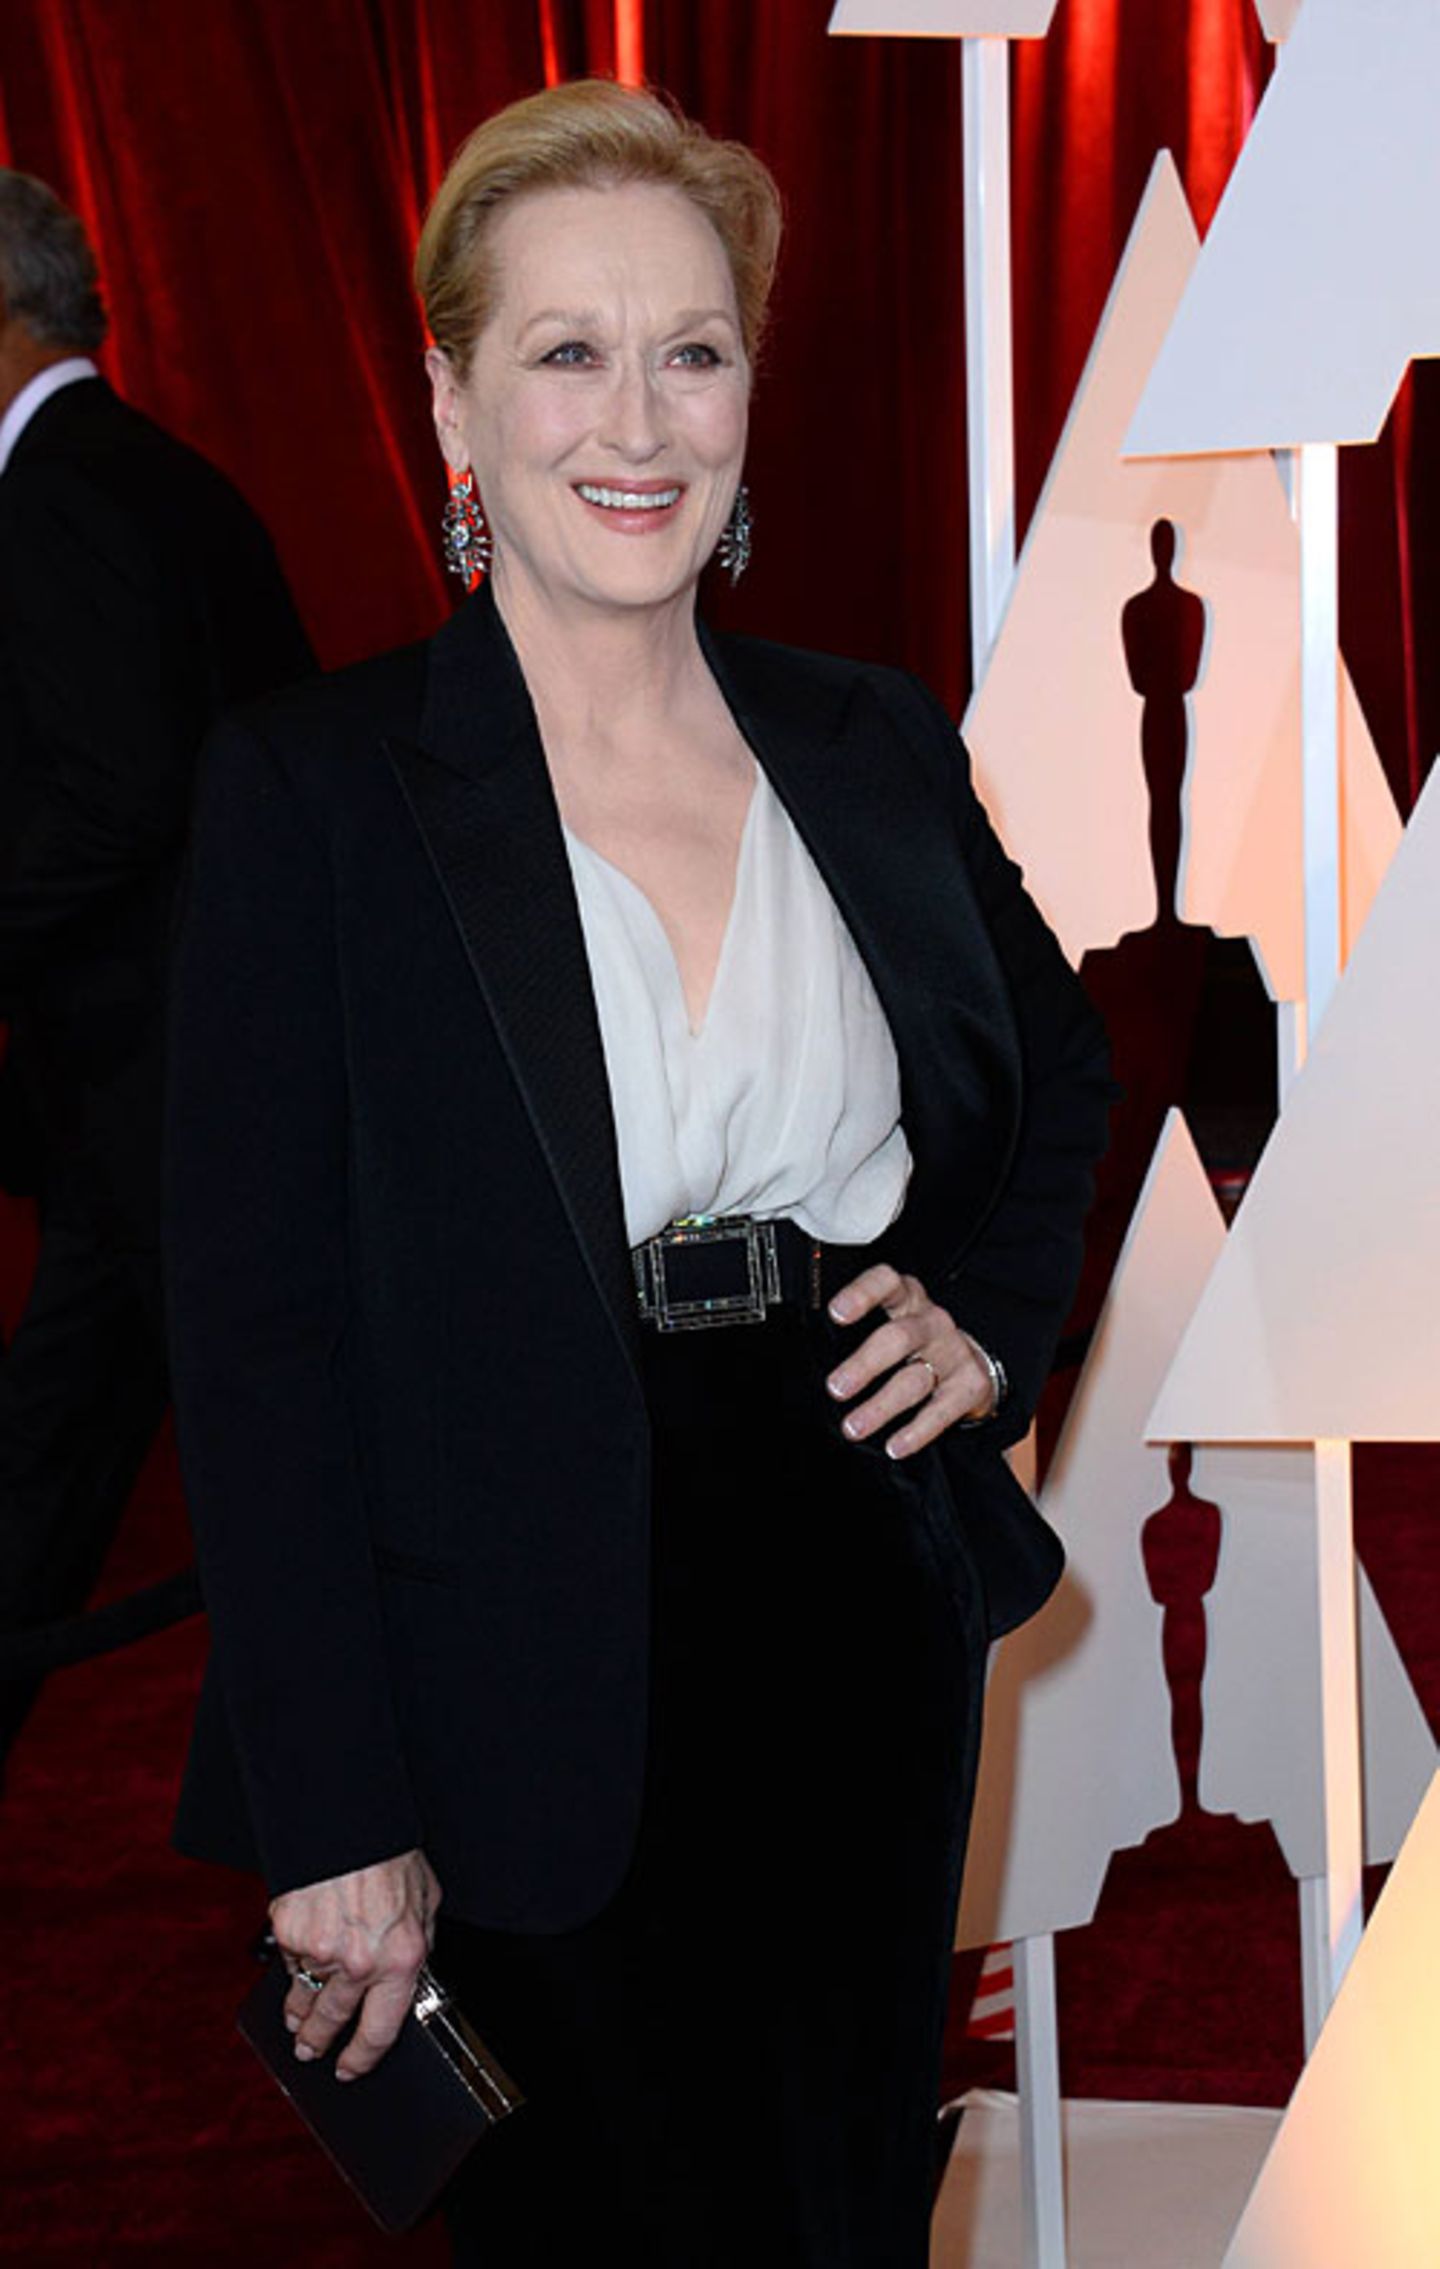 Top: Meryl Streep